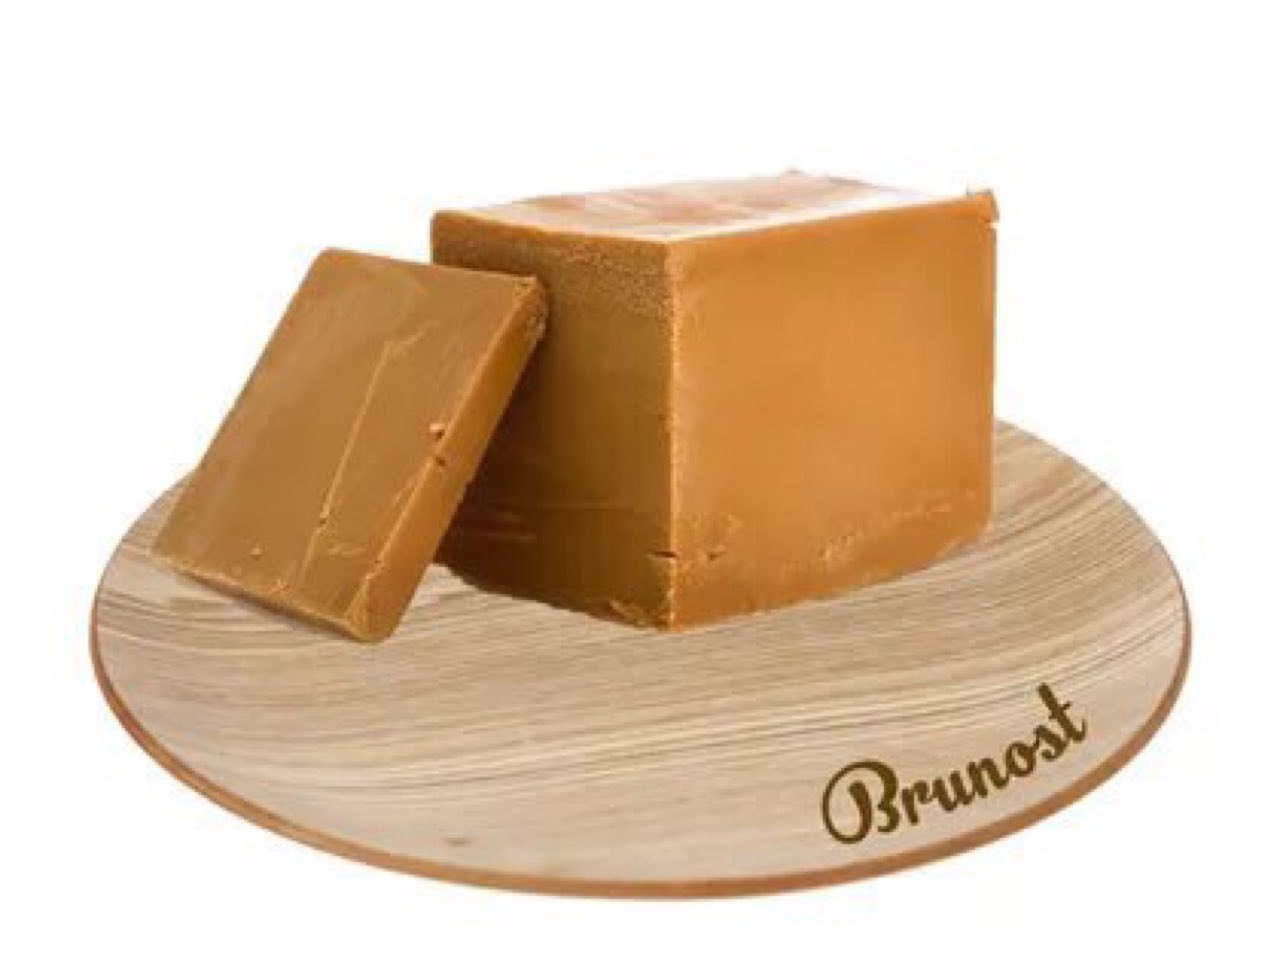 Сыр брюност купить. Норвежский сыр Брюност. Норвежский коричневый сыр Брюност. Норвежский козий сыр коричневый. БРЮНУСТ сыр.